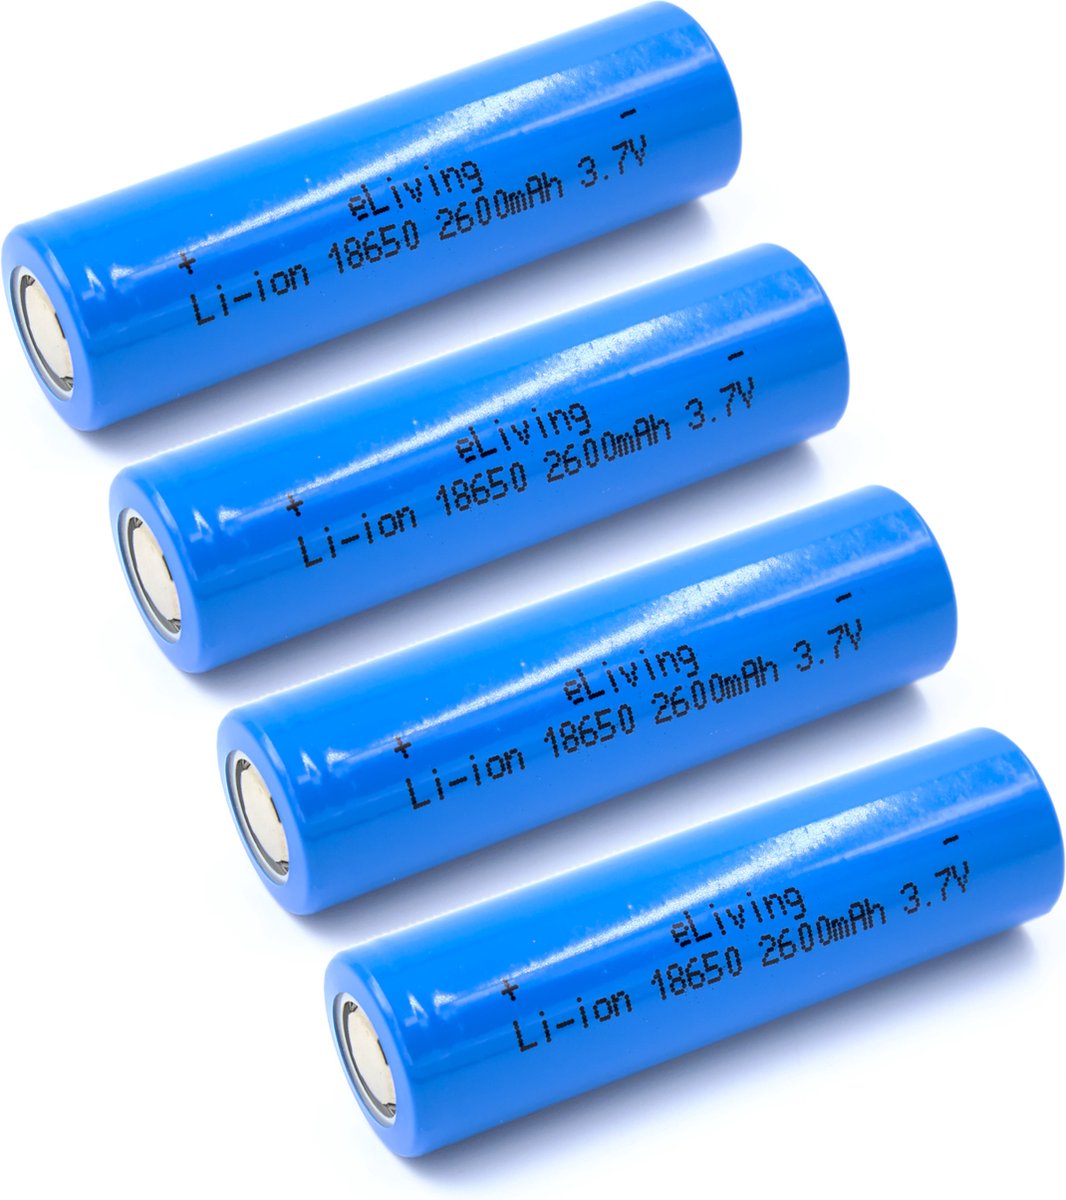 eLiving 18650 3.7V Flat Top batterijen. 2600mAh, Li-ion. 65x18mm. 4 stuks.